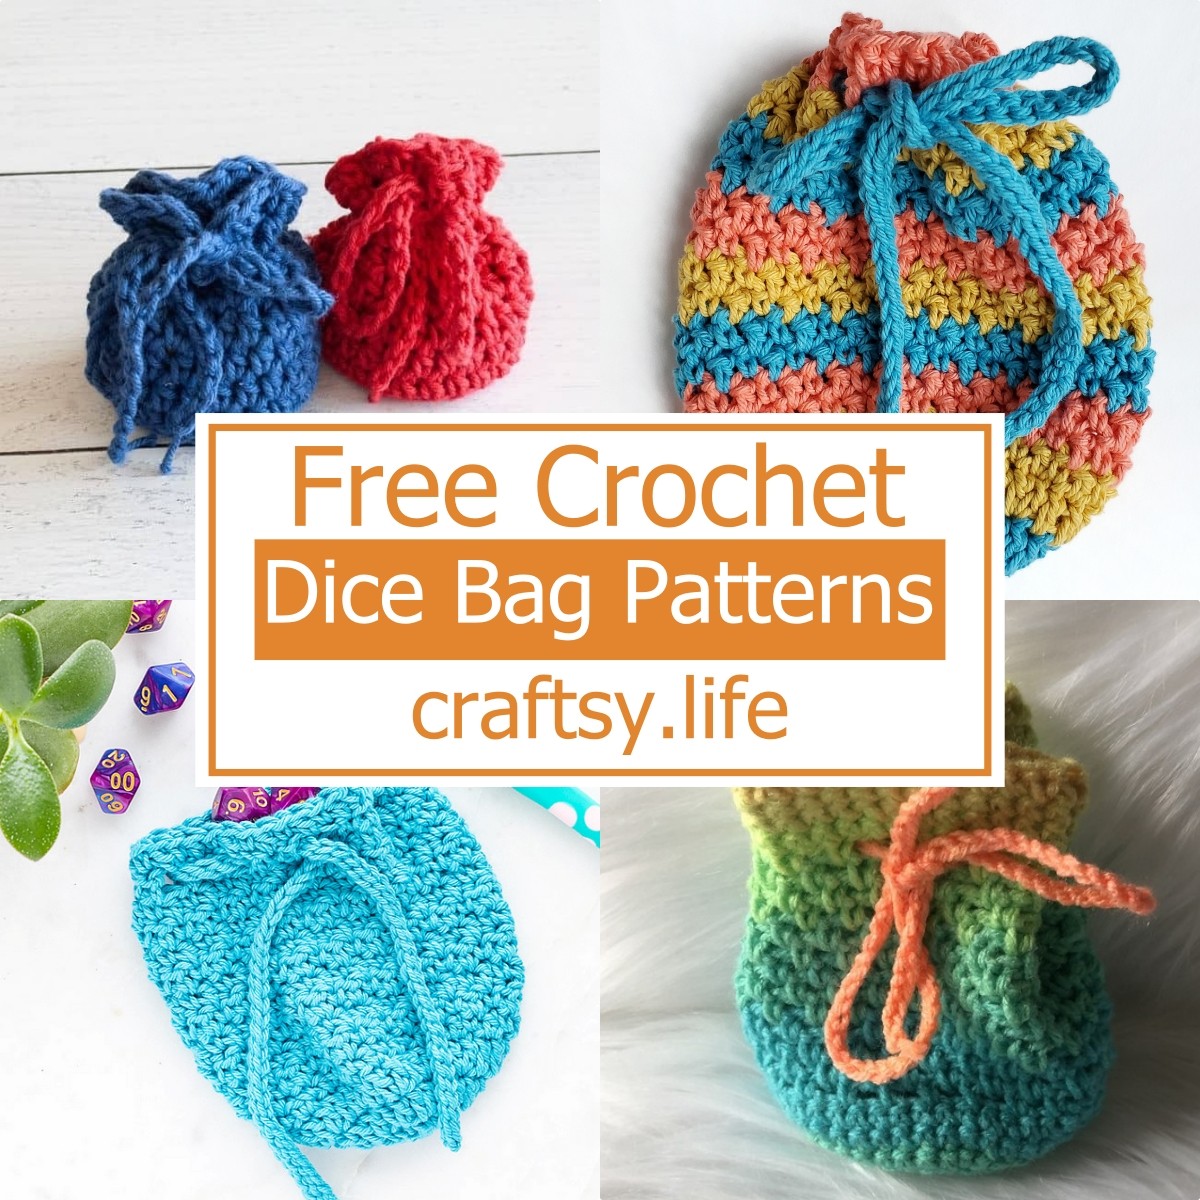 2 Free Crochet Dice Bag Patterns